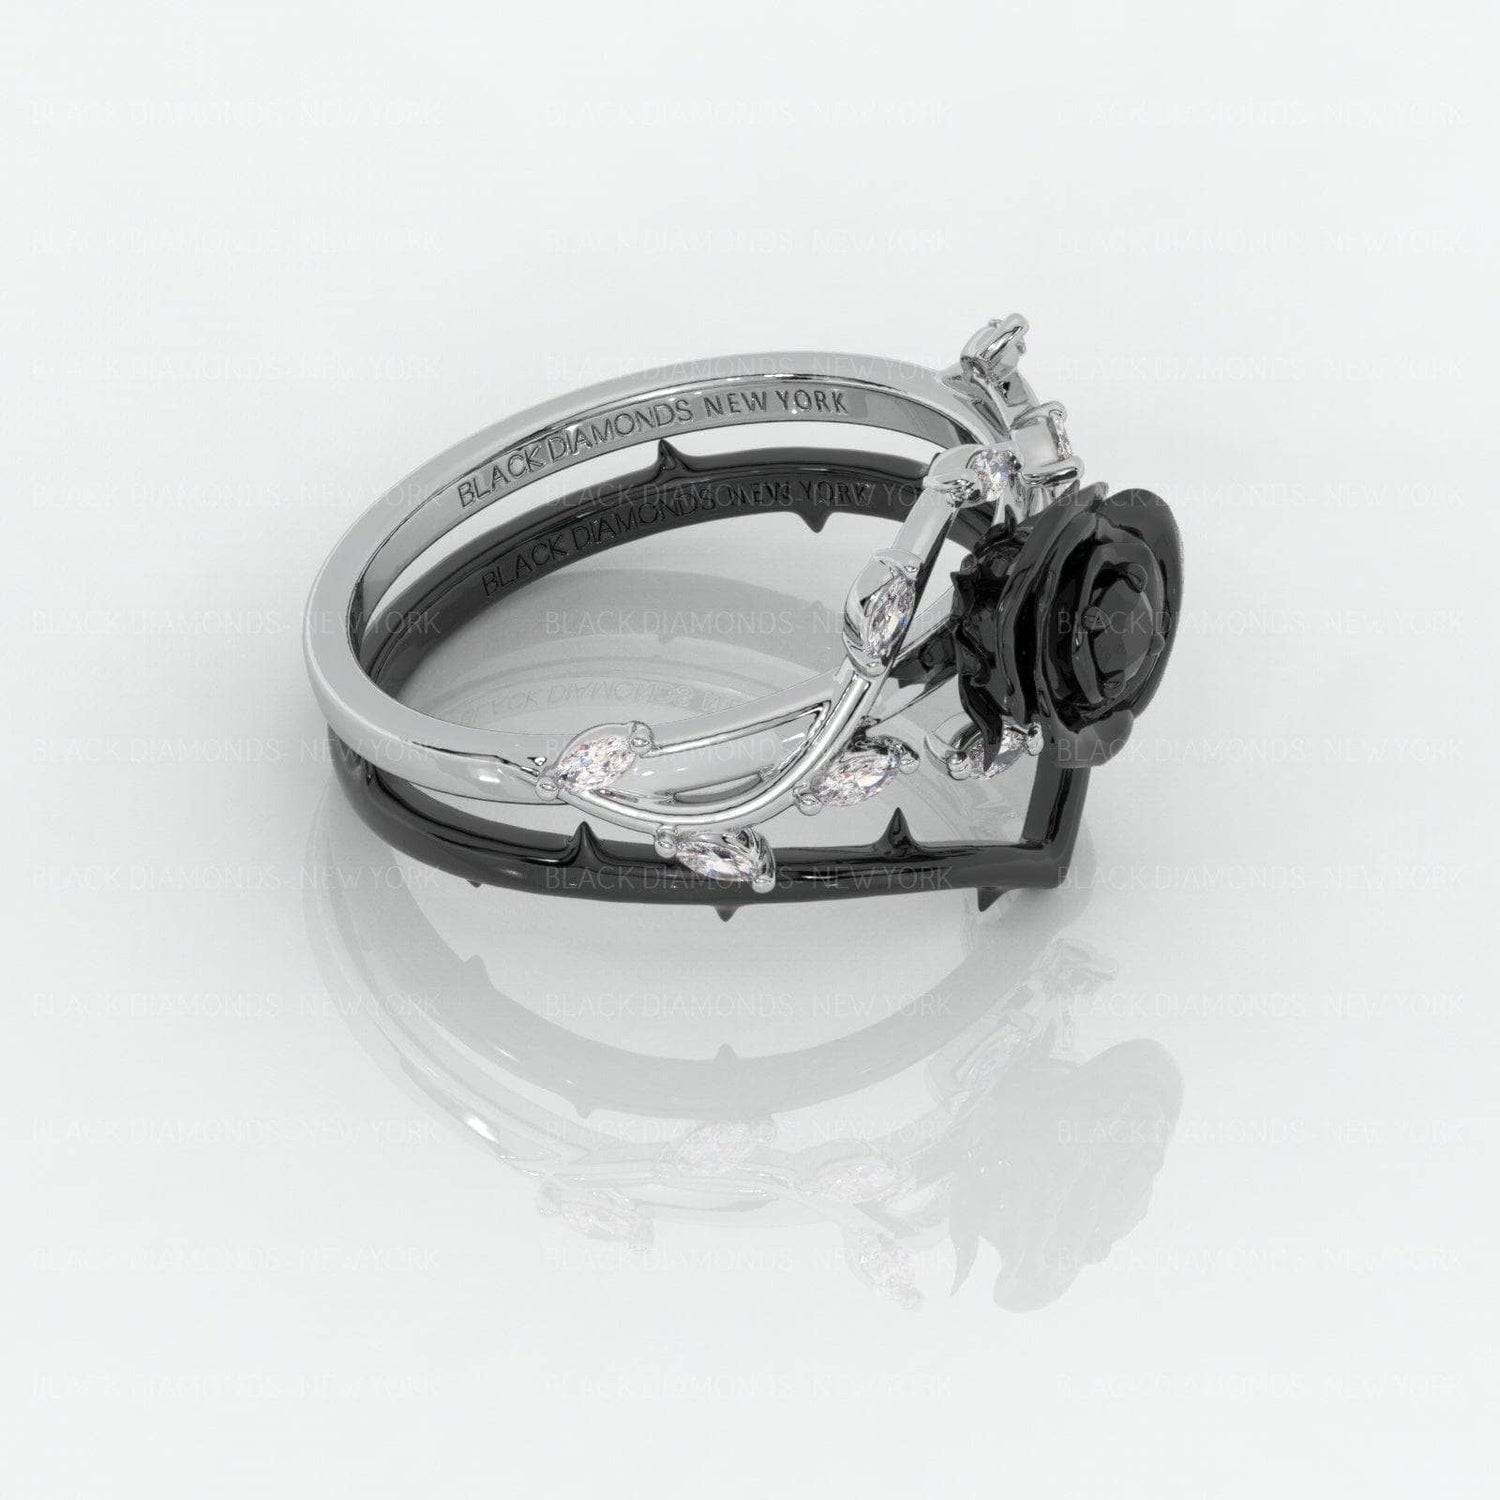 Elegant Silver Ring With Round Black Stone